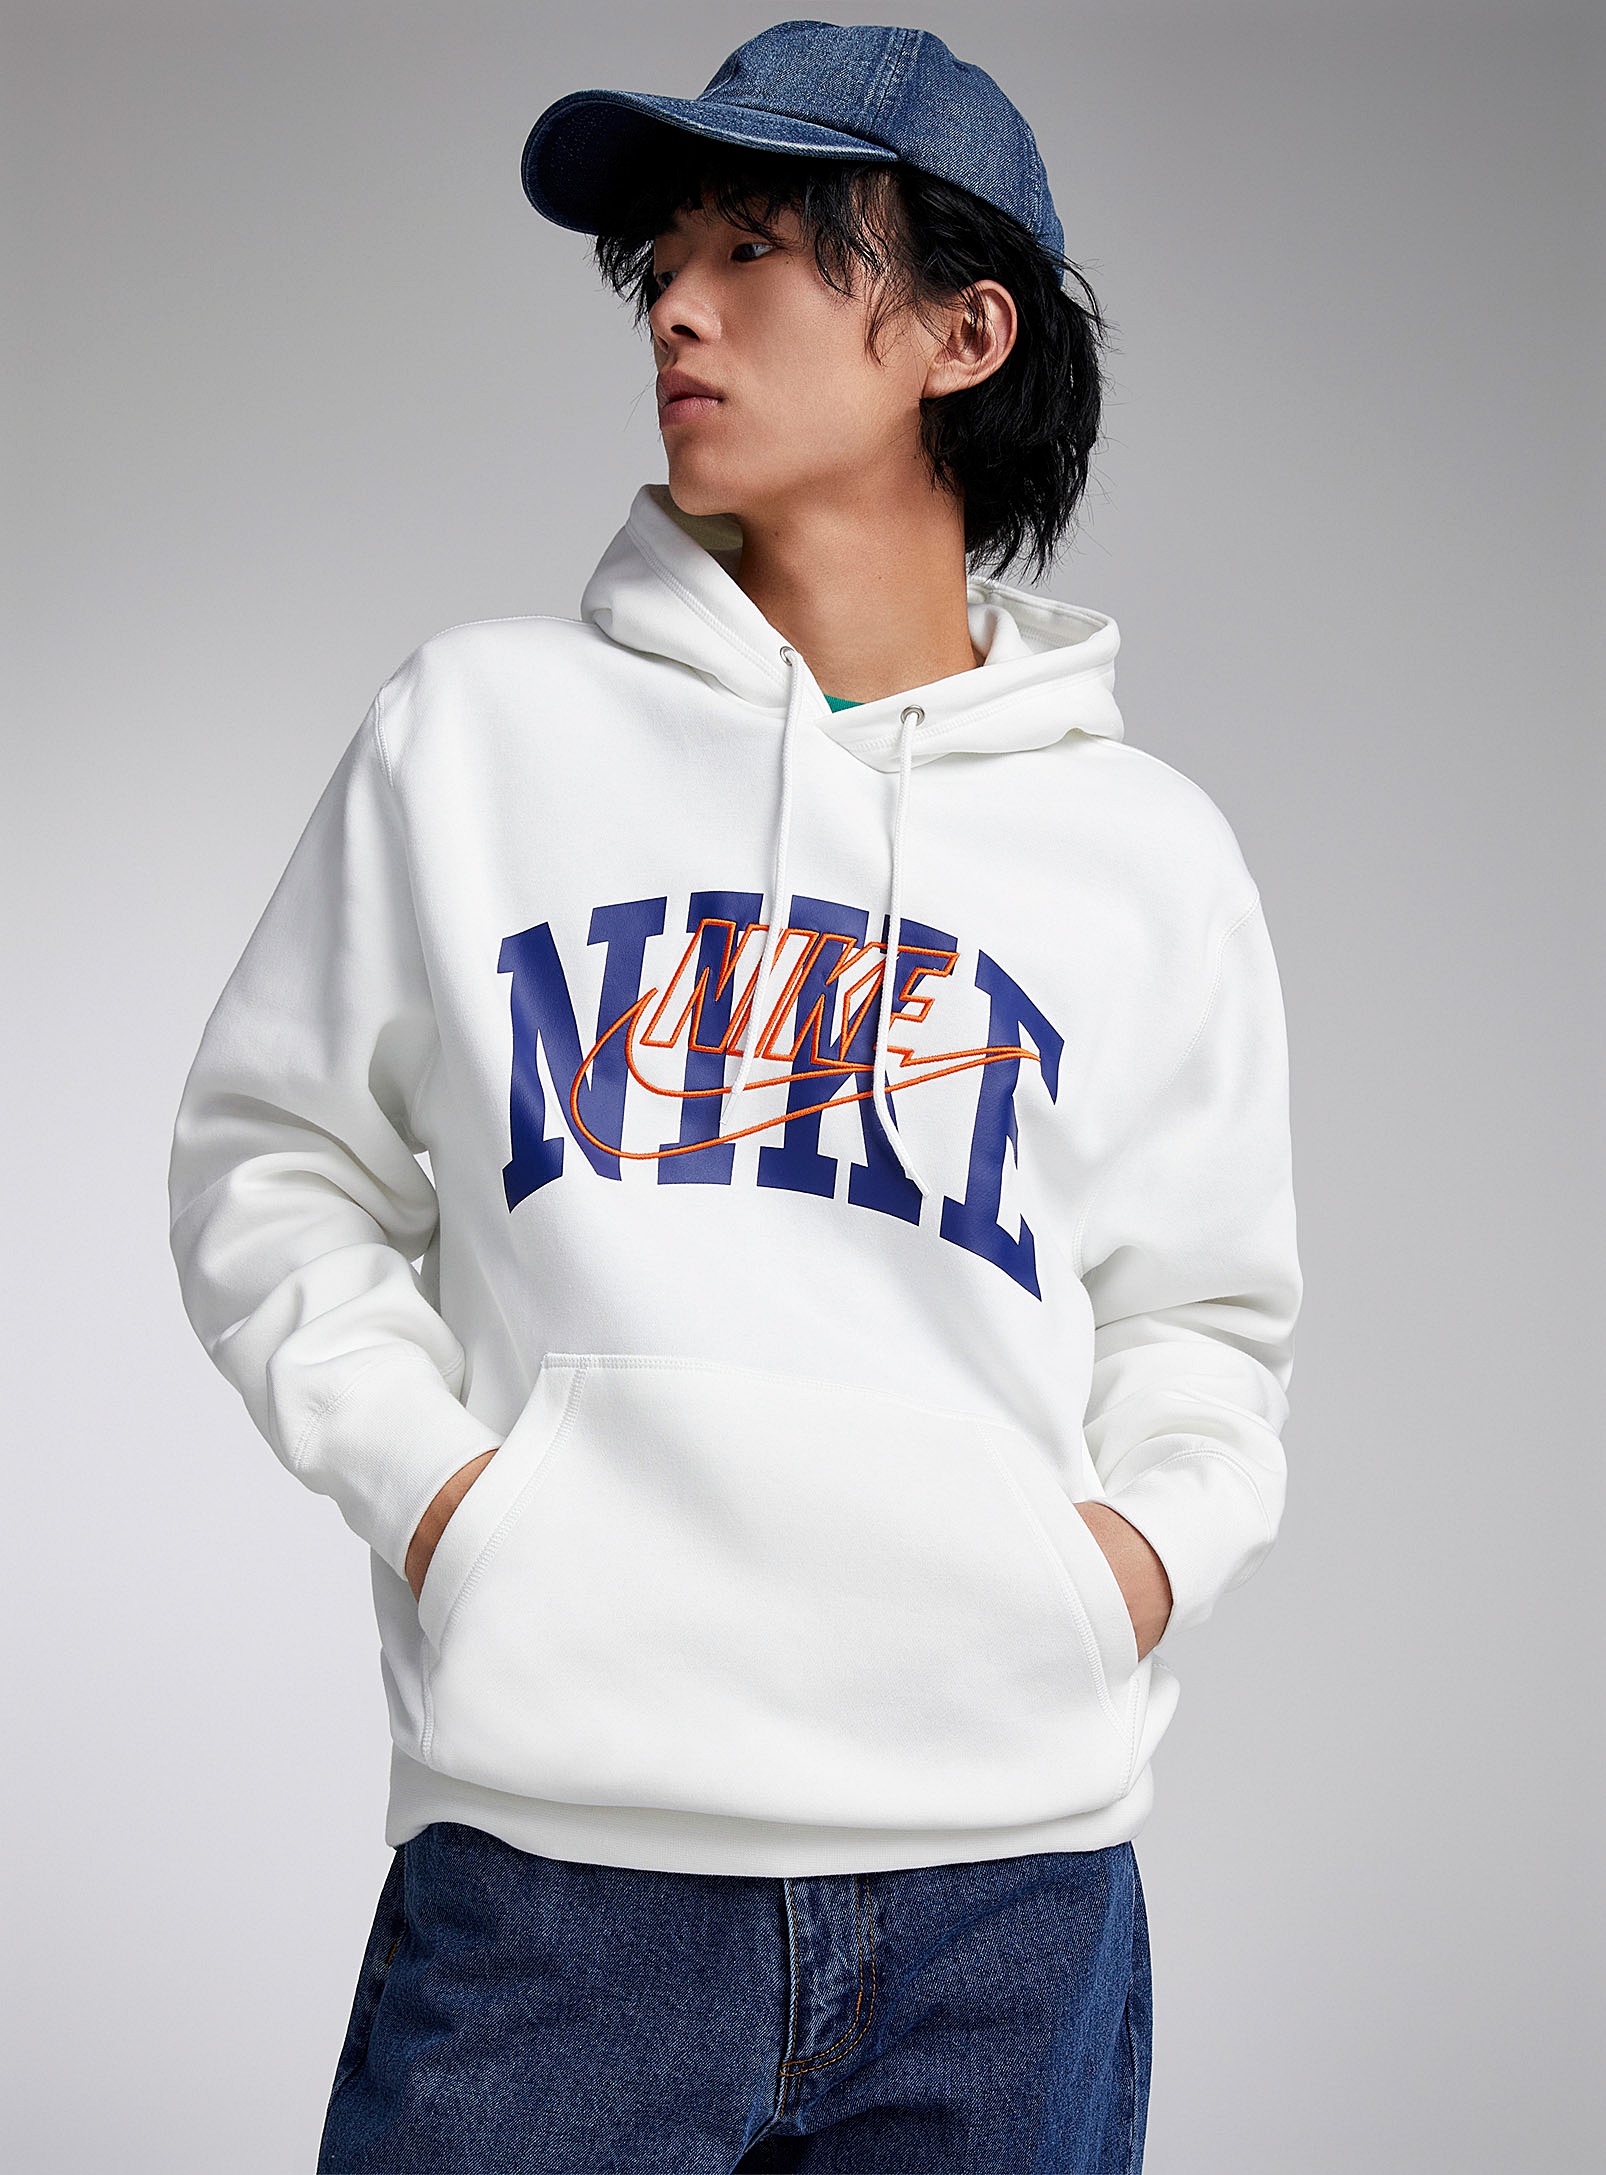 Nike - Men's Double-logo hoodie